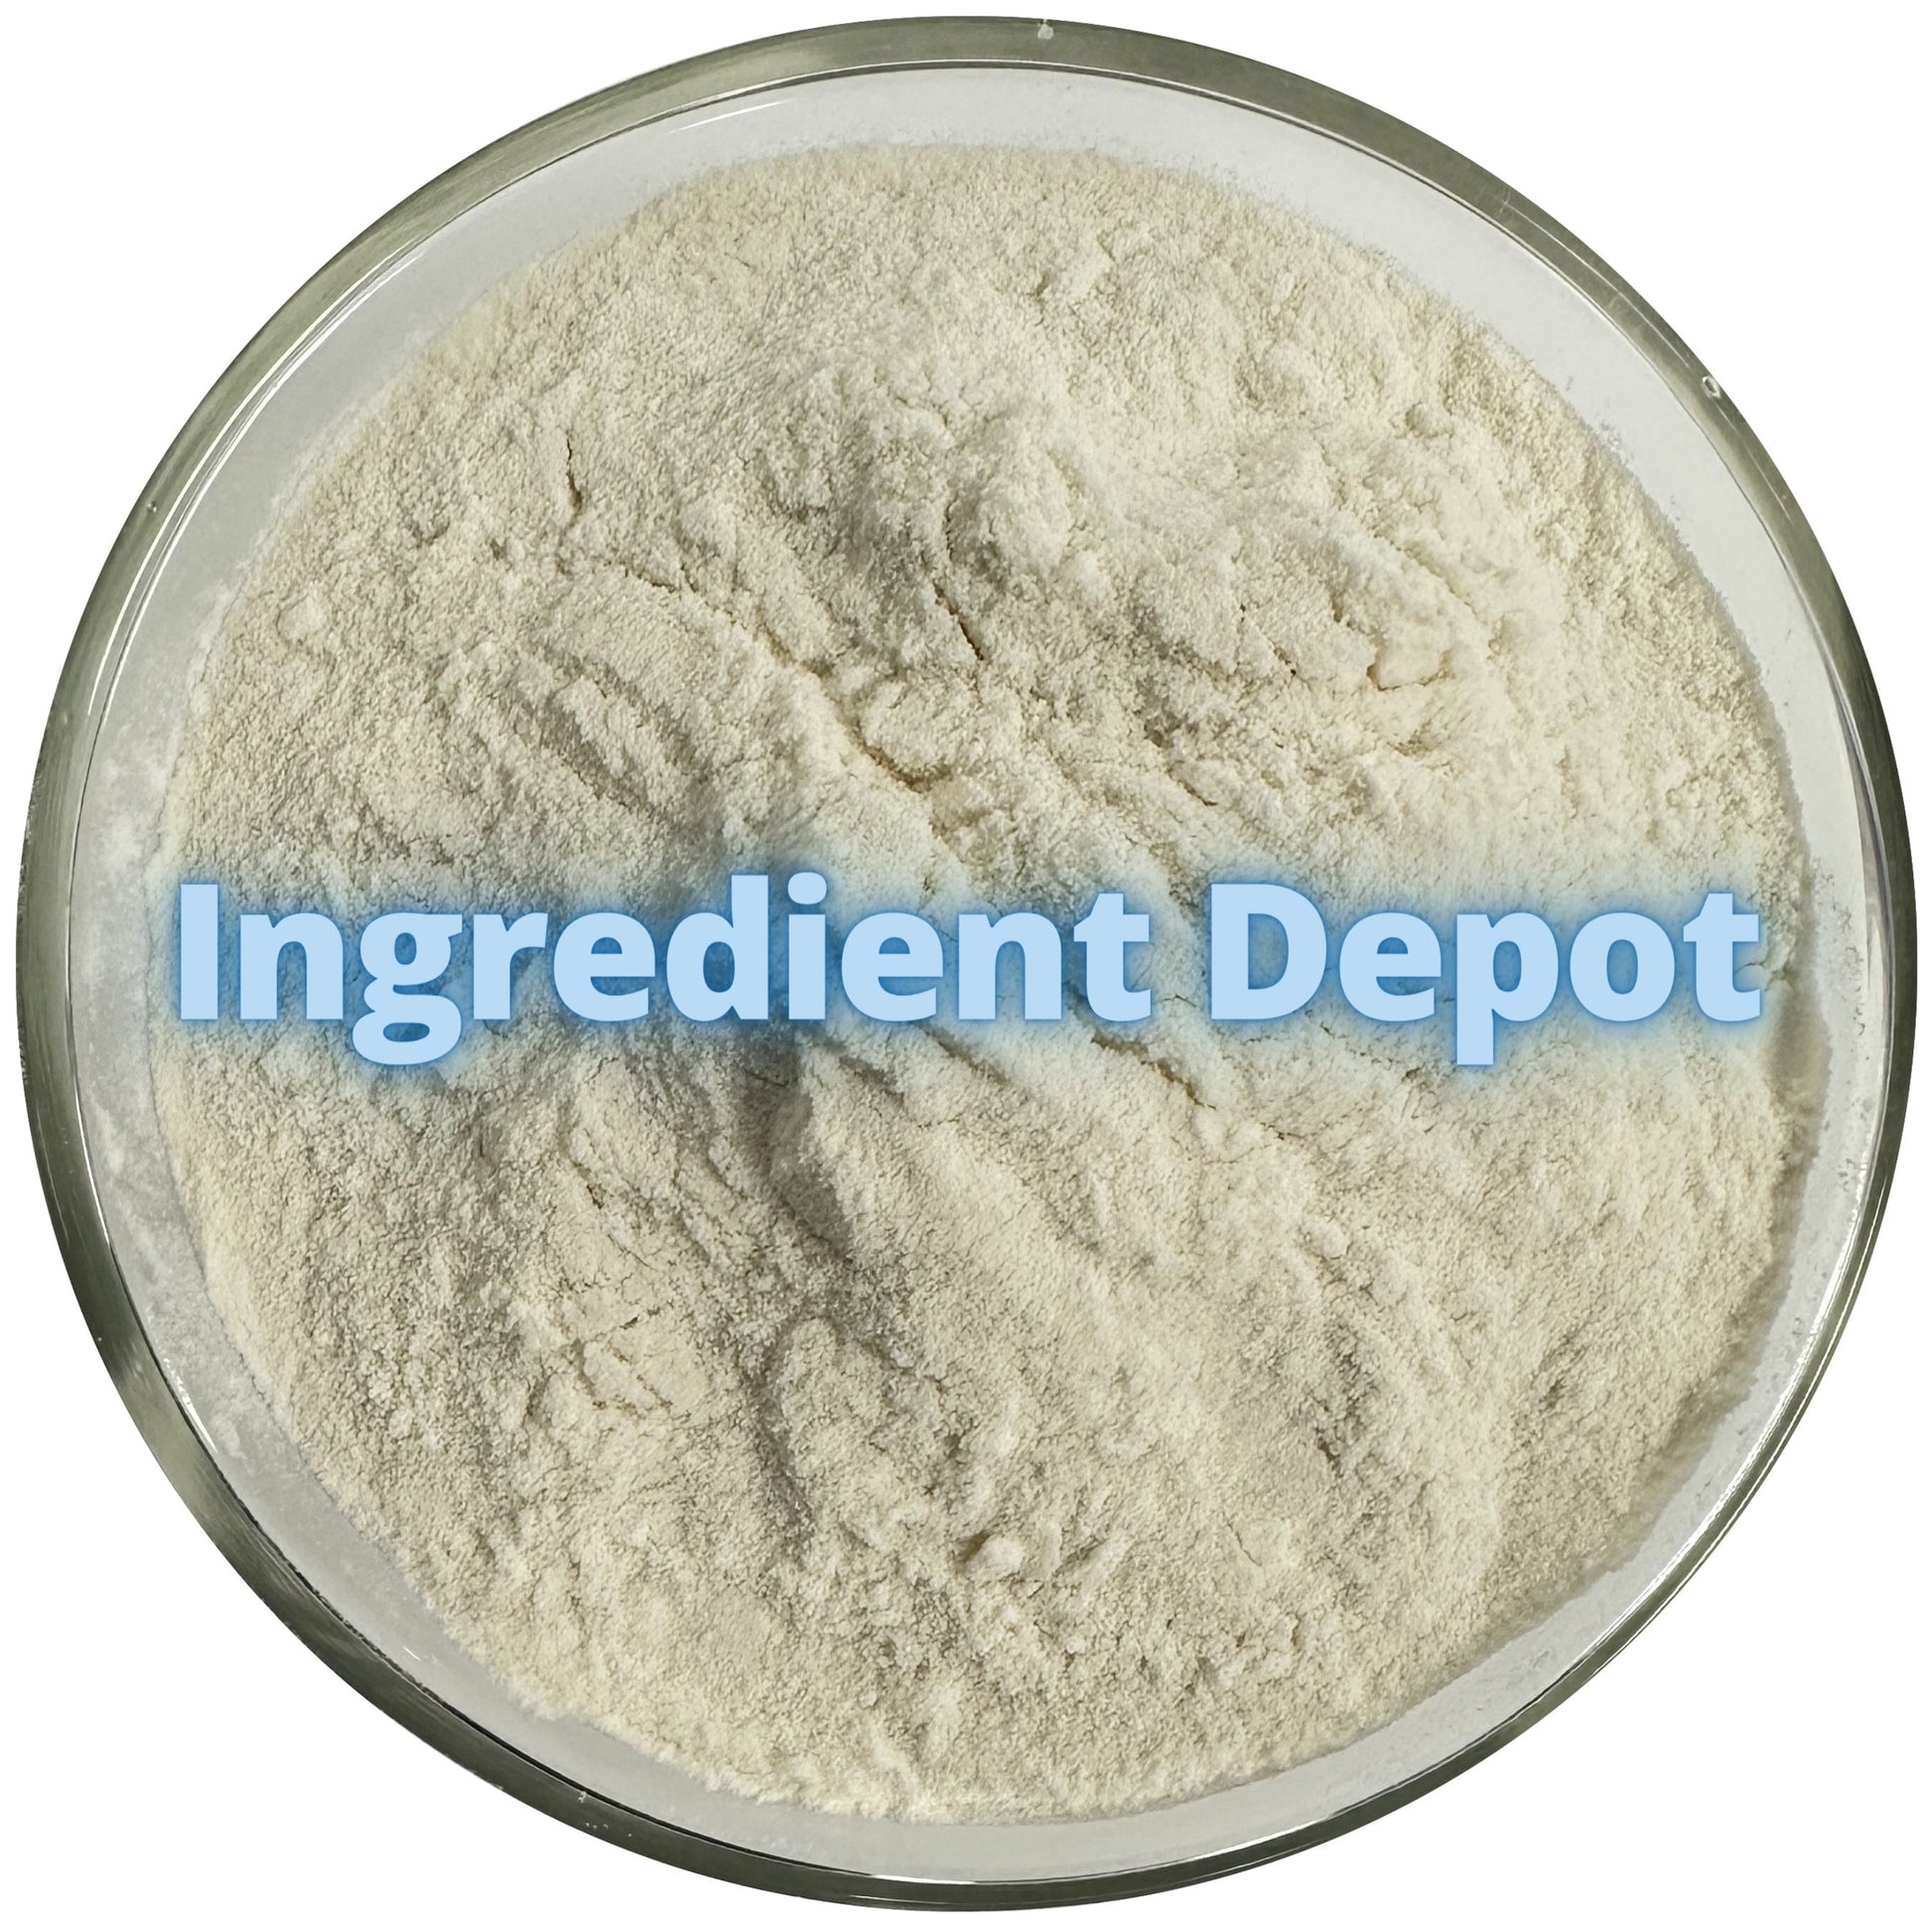 Gum Arabic (Acacia) - USP/NF Grade 3 kgs - Ingredient Depot